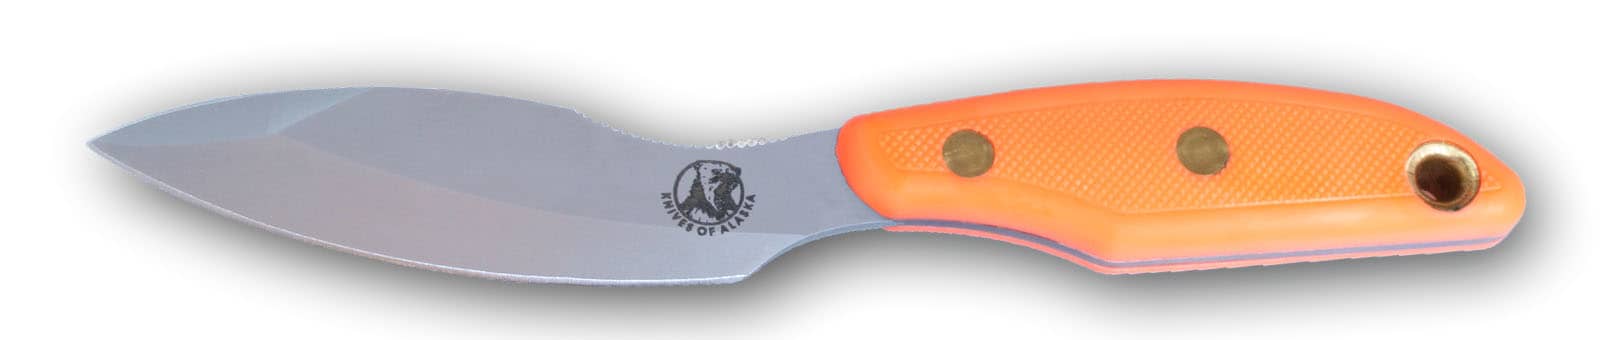 Knives Of Alaska Yukon #1 Orange Suregrip Fixed Blade Knife